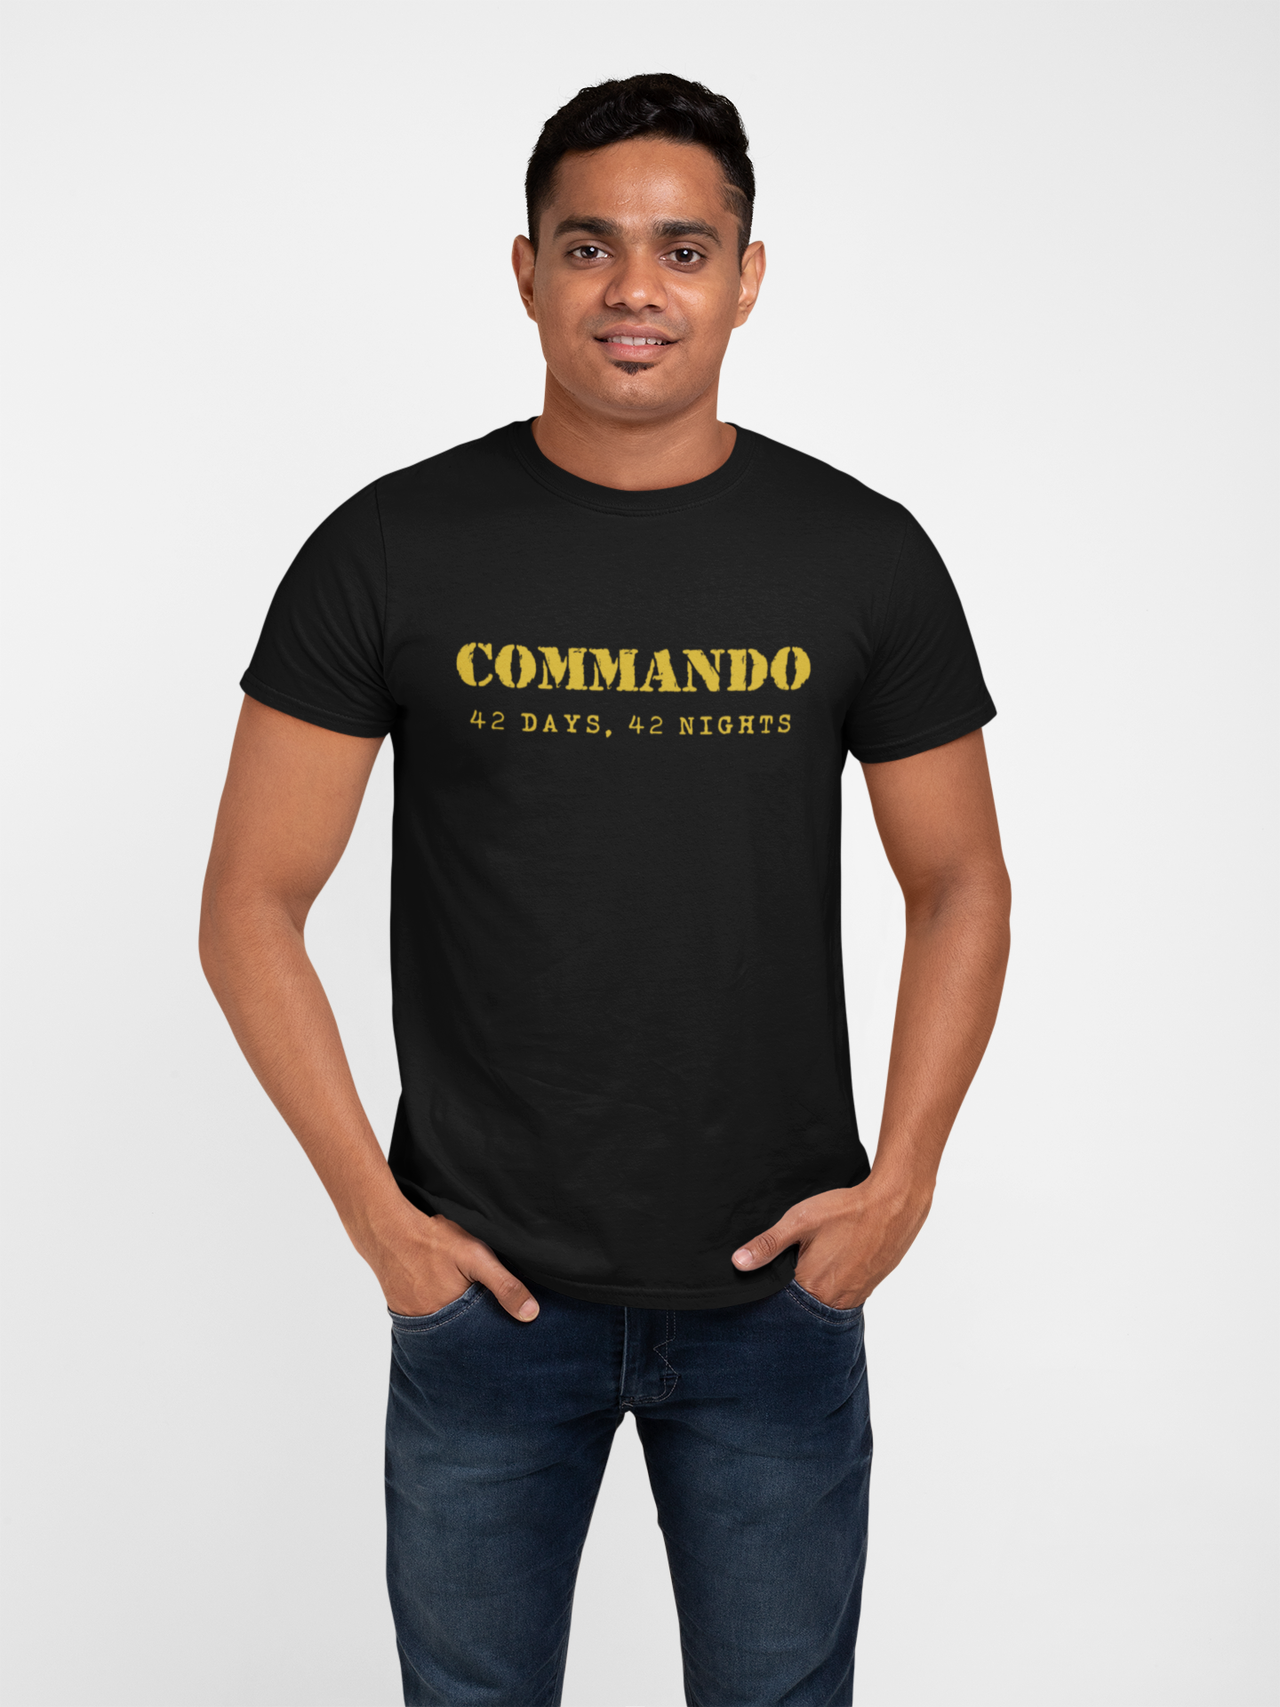 Commando T-shirt - Commando - 42 Days 42 Nights (Men)